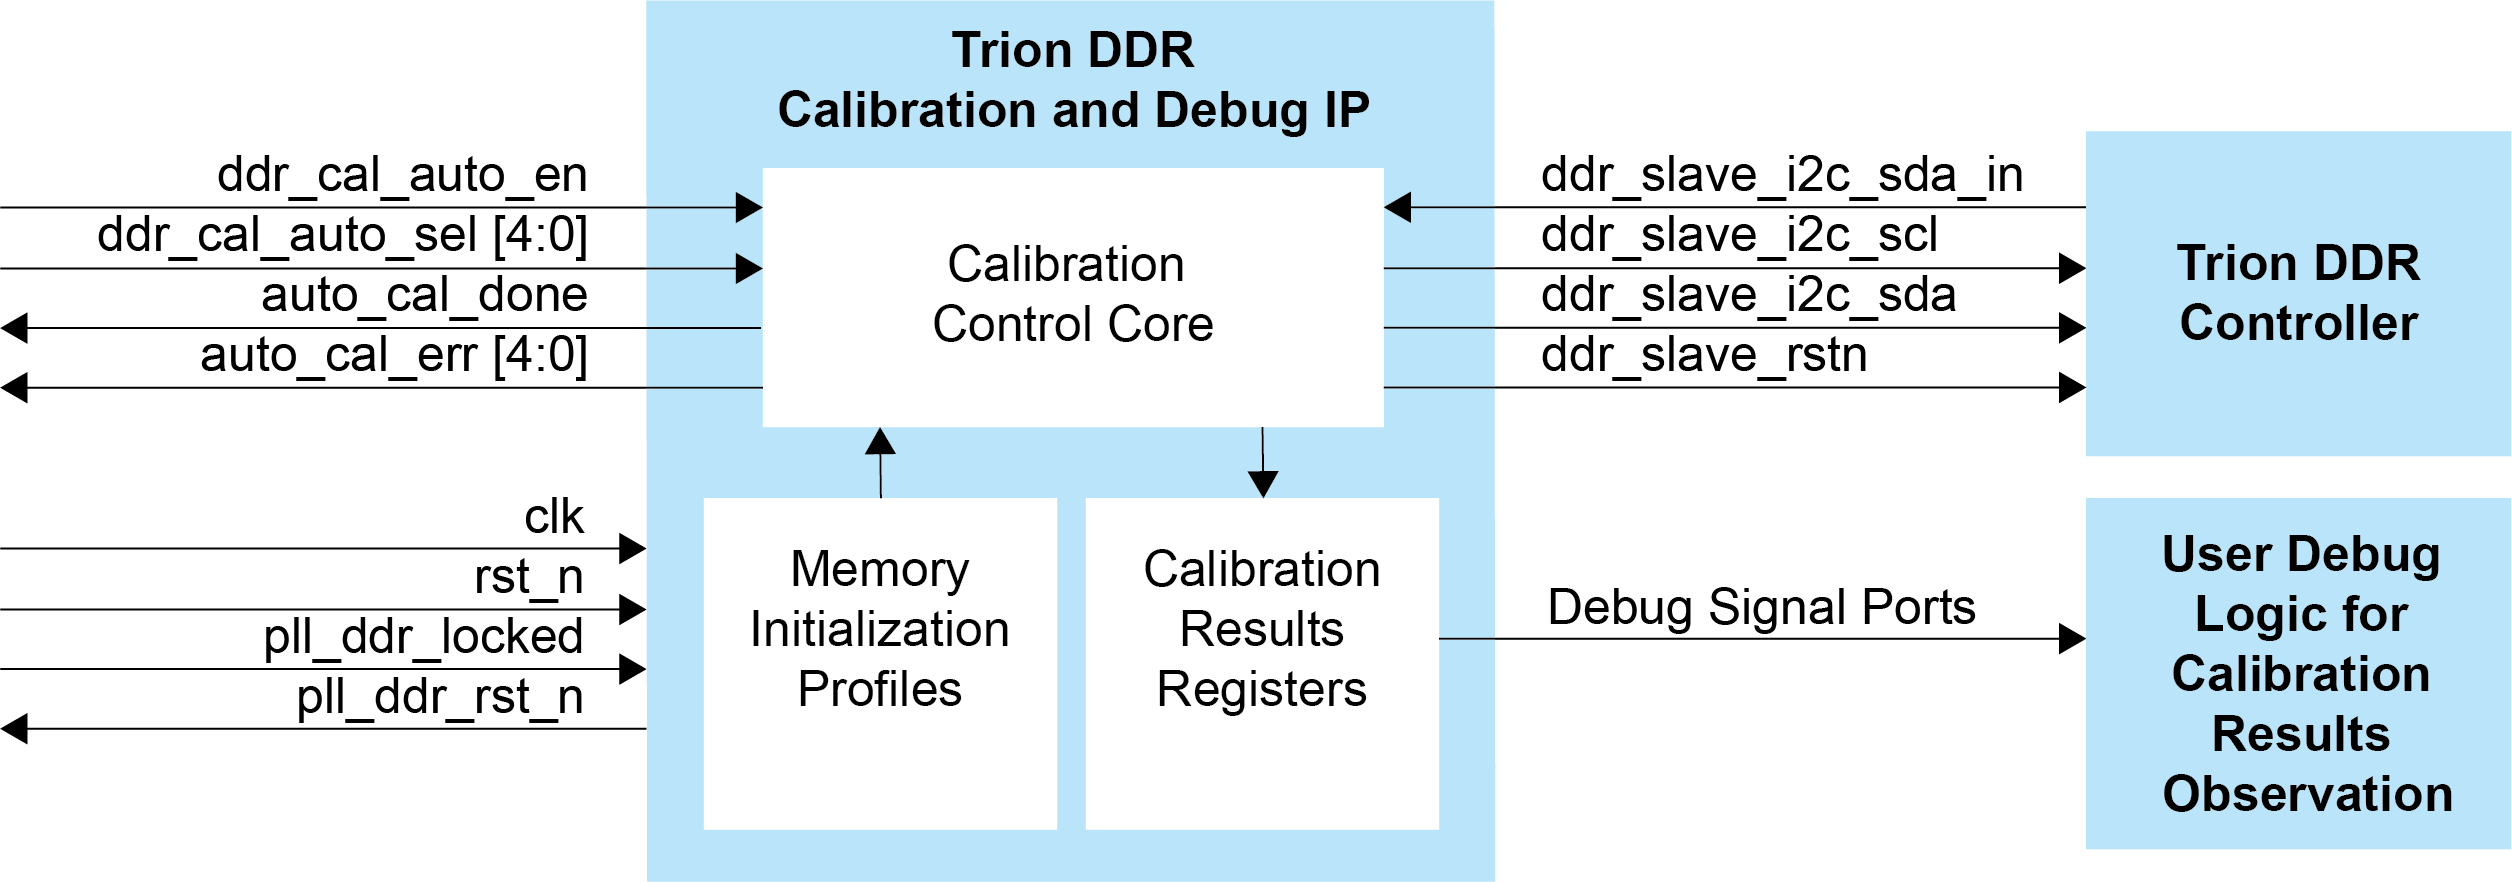 Trion DDR Calibration and Debug IP Block Diagram